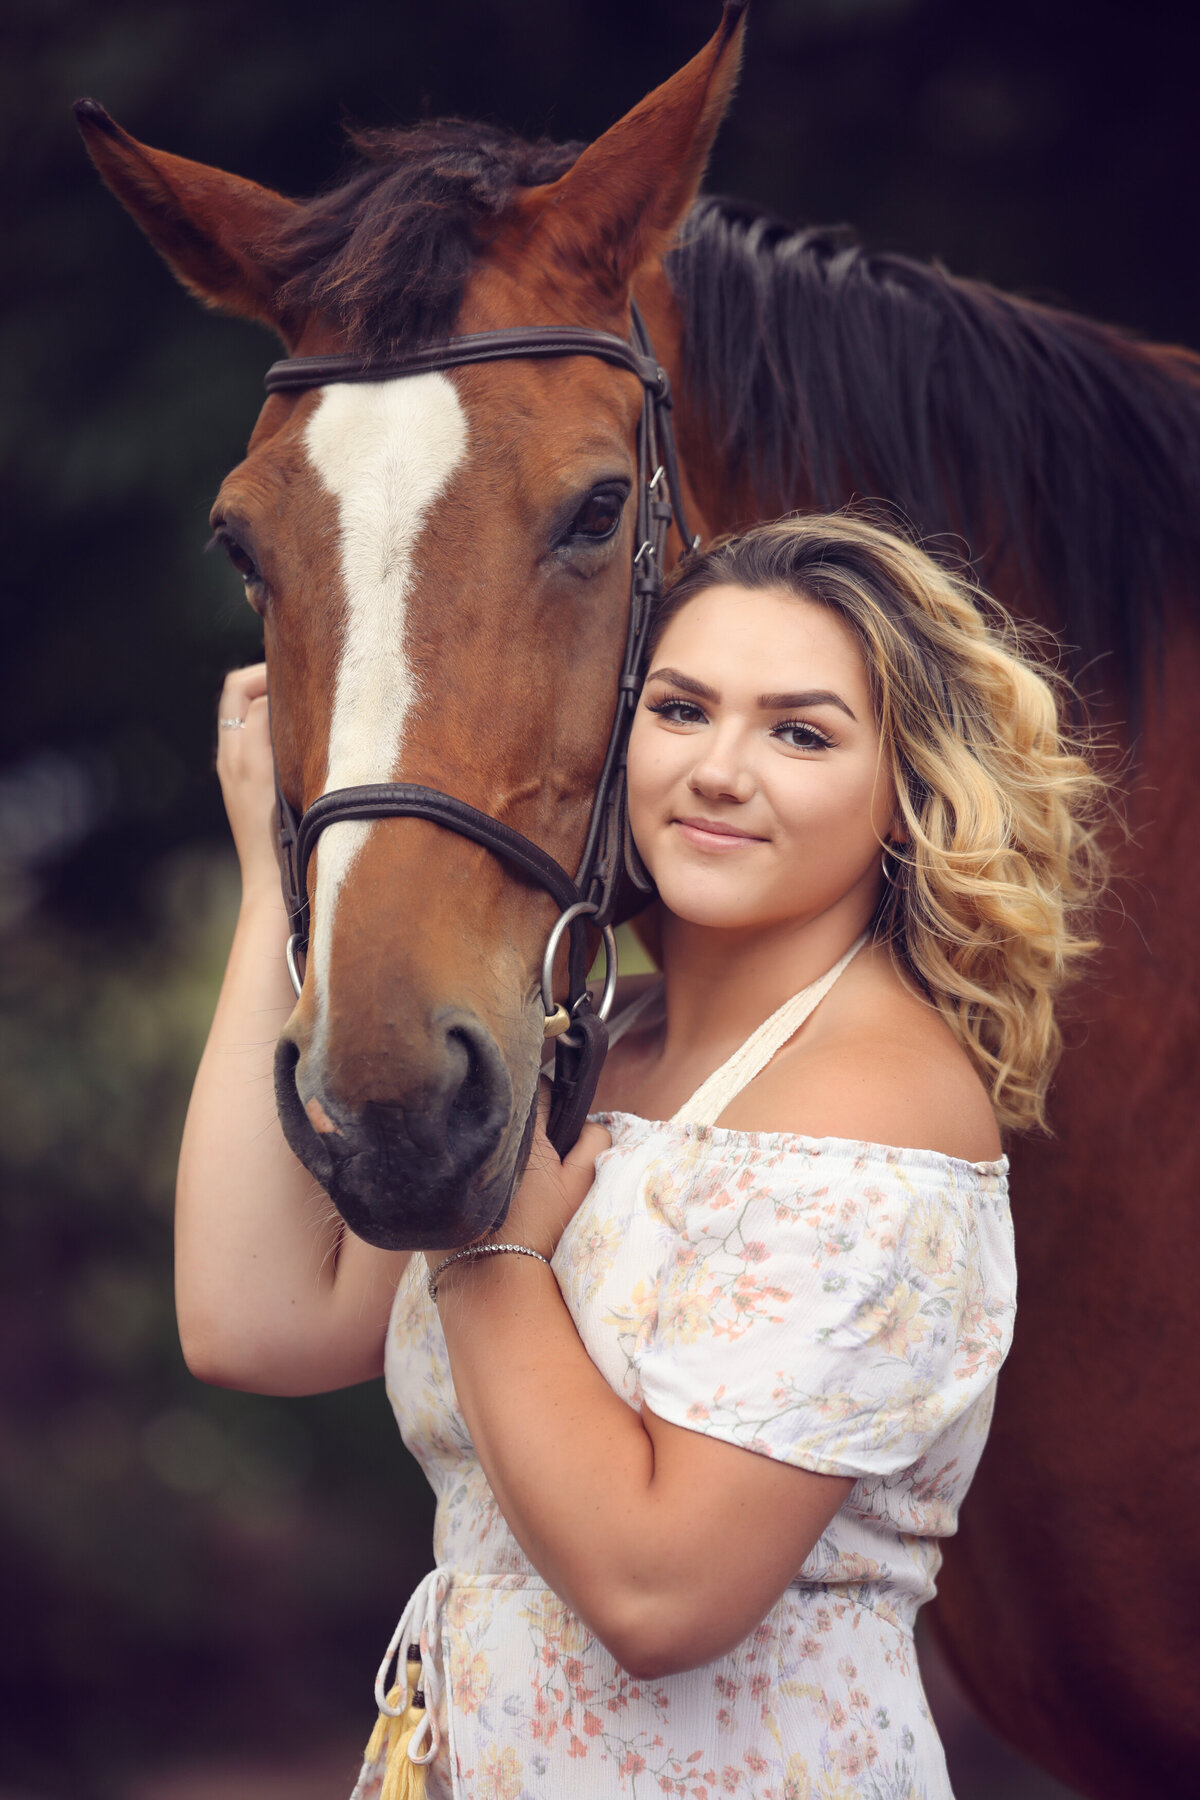 Erie-Colorado-High-School-Senior-Photos-Photography-Yvonne-Min-Sunset-Nature-Dress-Dance-Farm-Natural-Light-Outside-Girls-Horse-Horses-Stable-Dress-1042